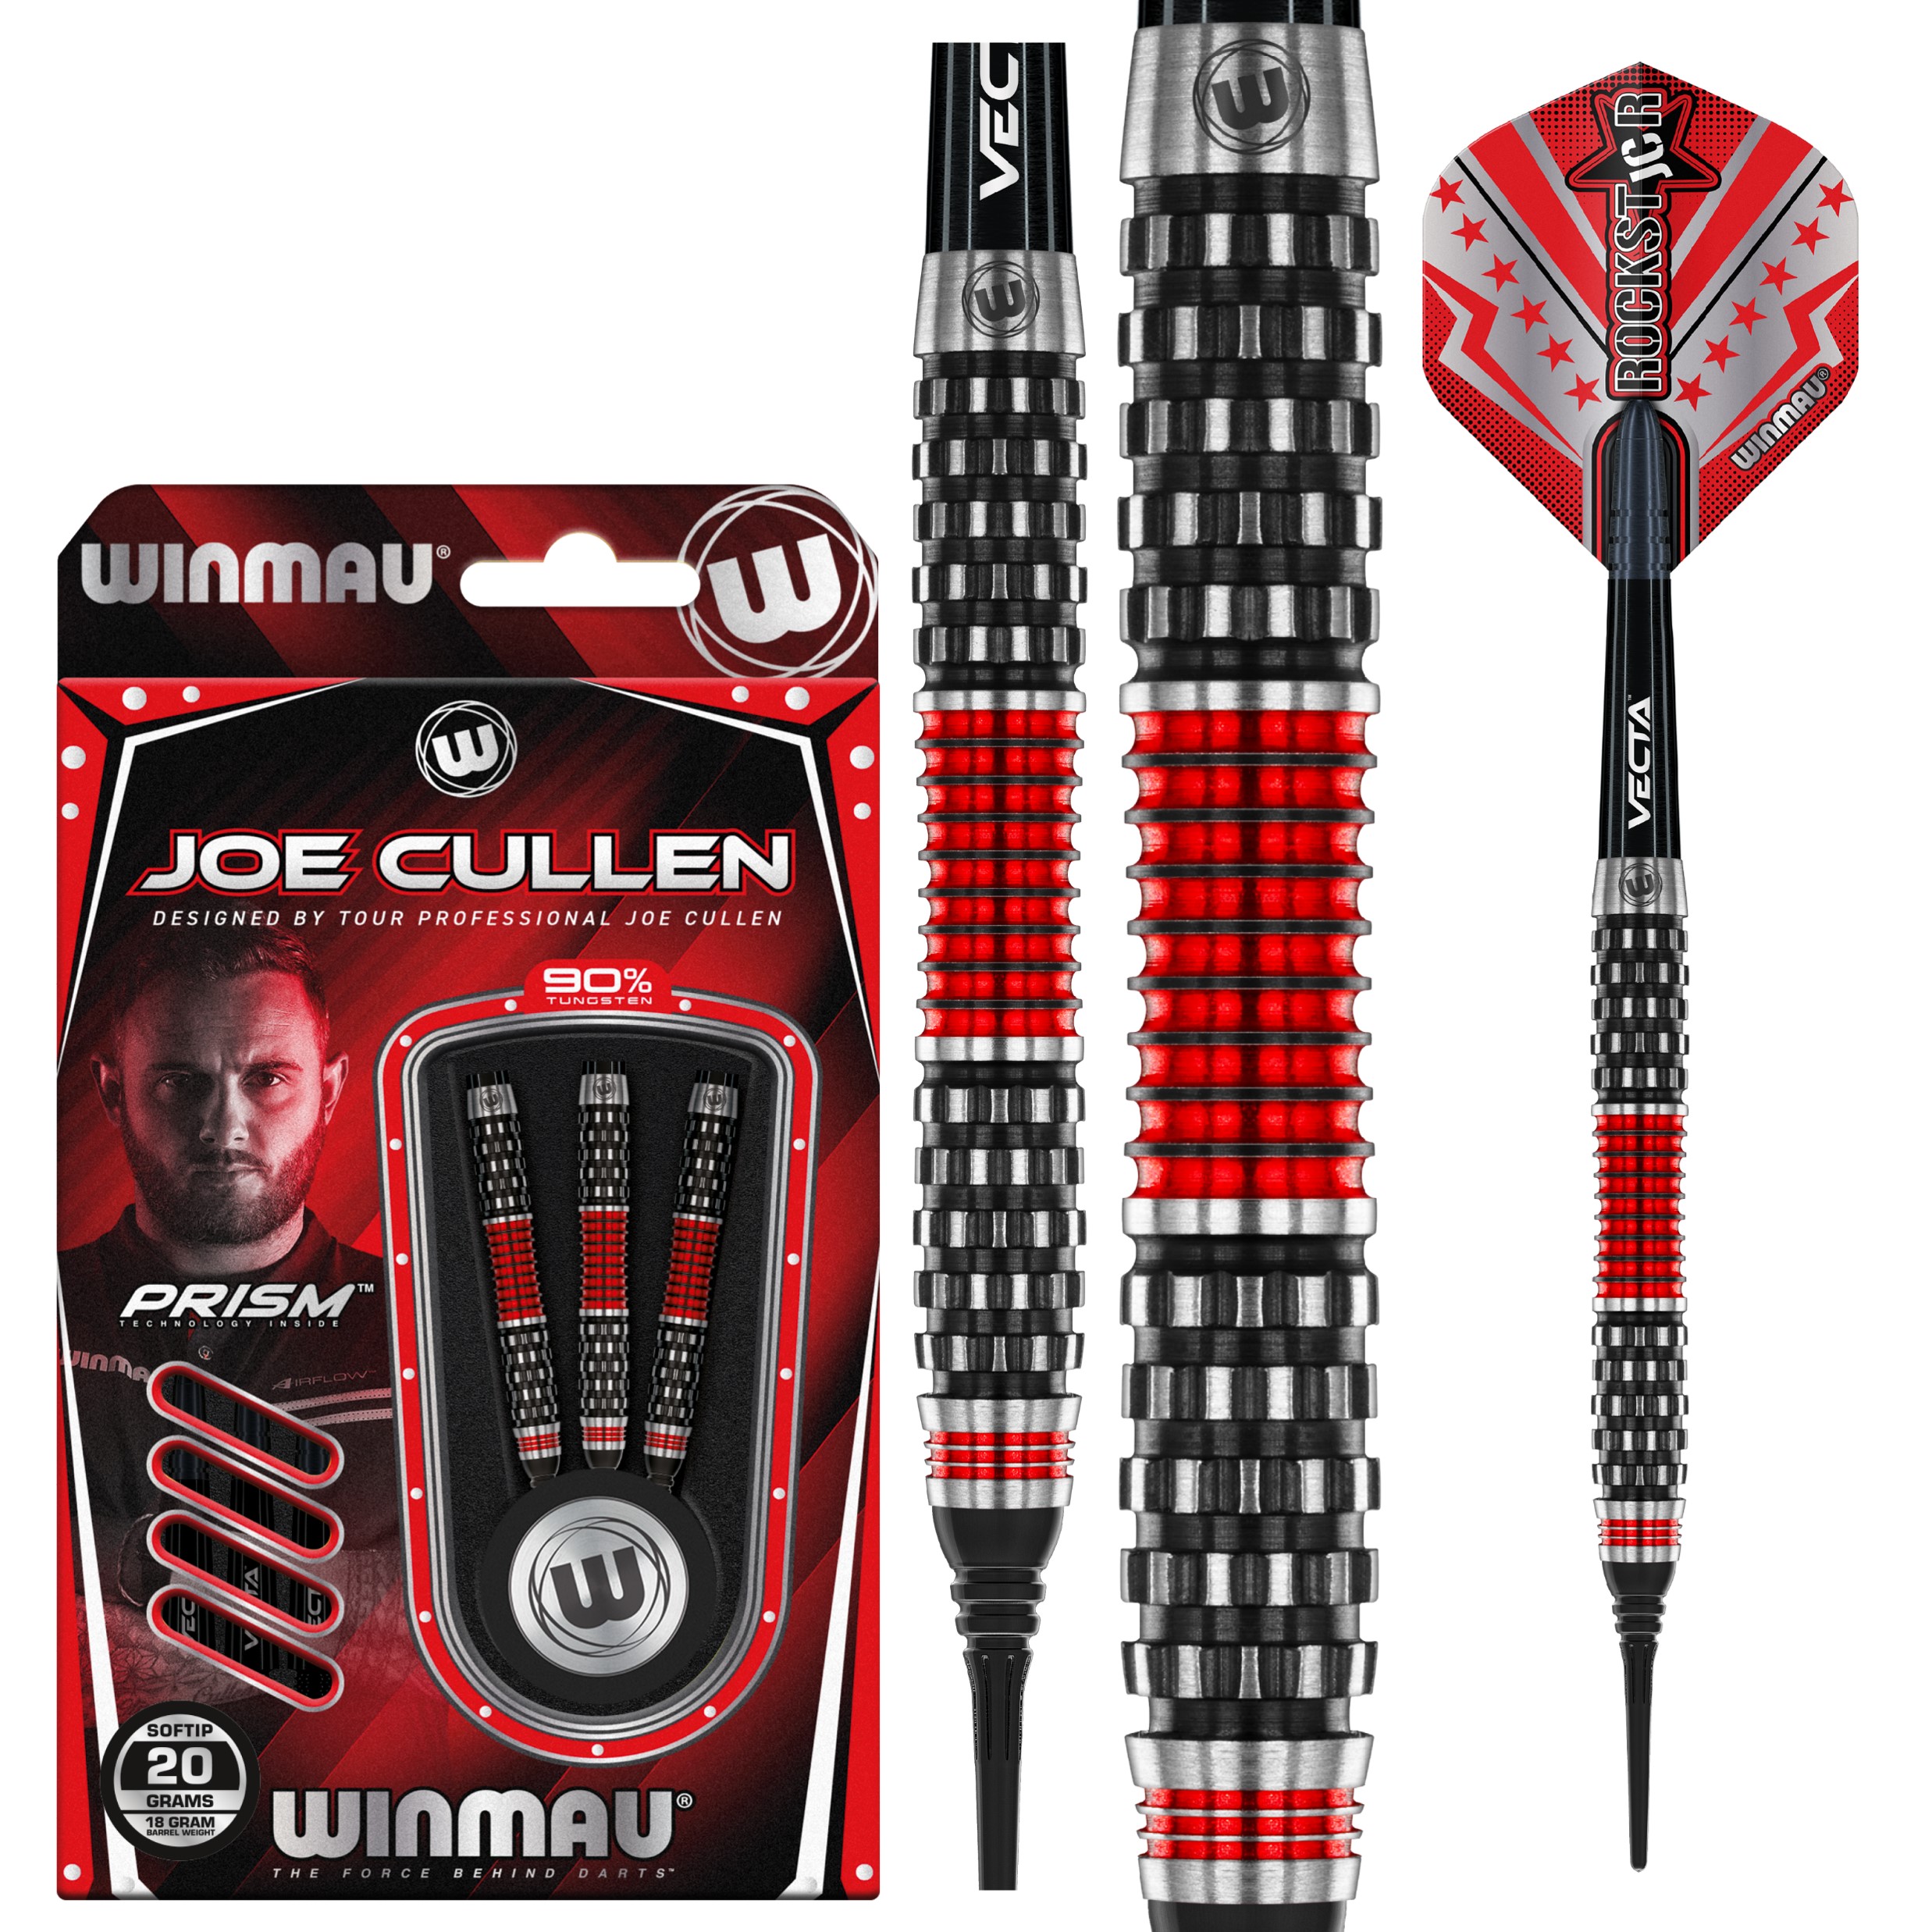 Joe Cullen Rockstar Series RS 1.0 Winmau - Softdart